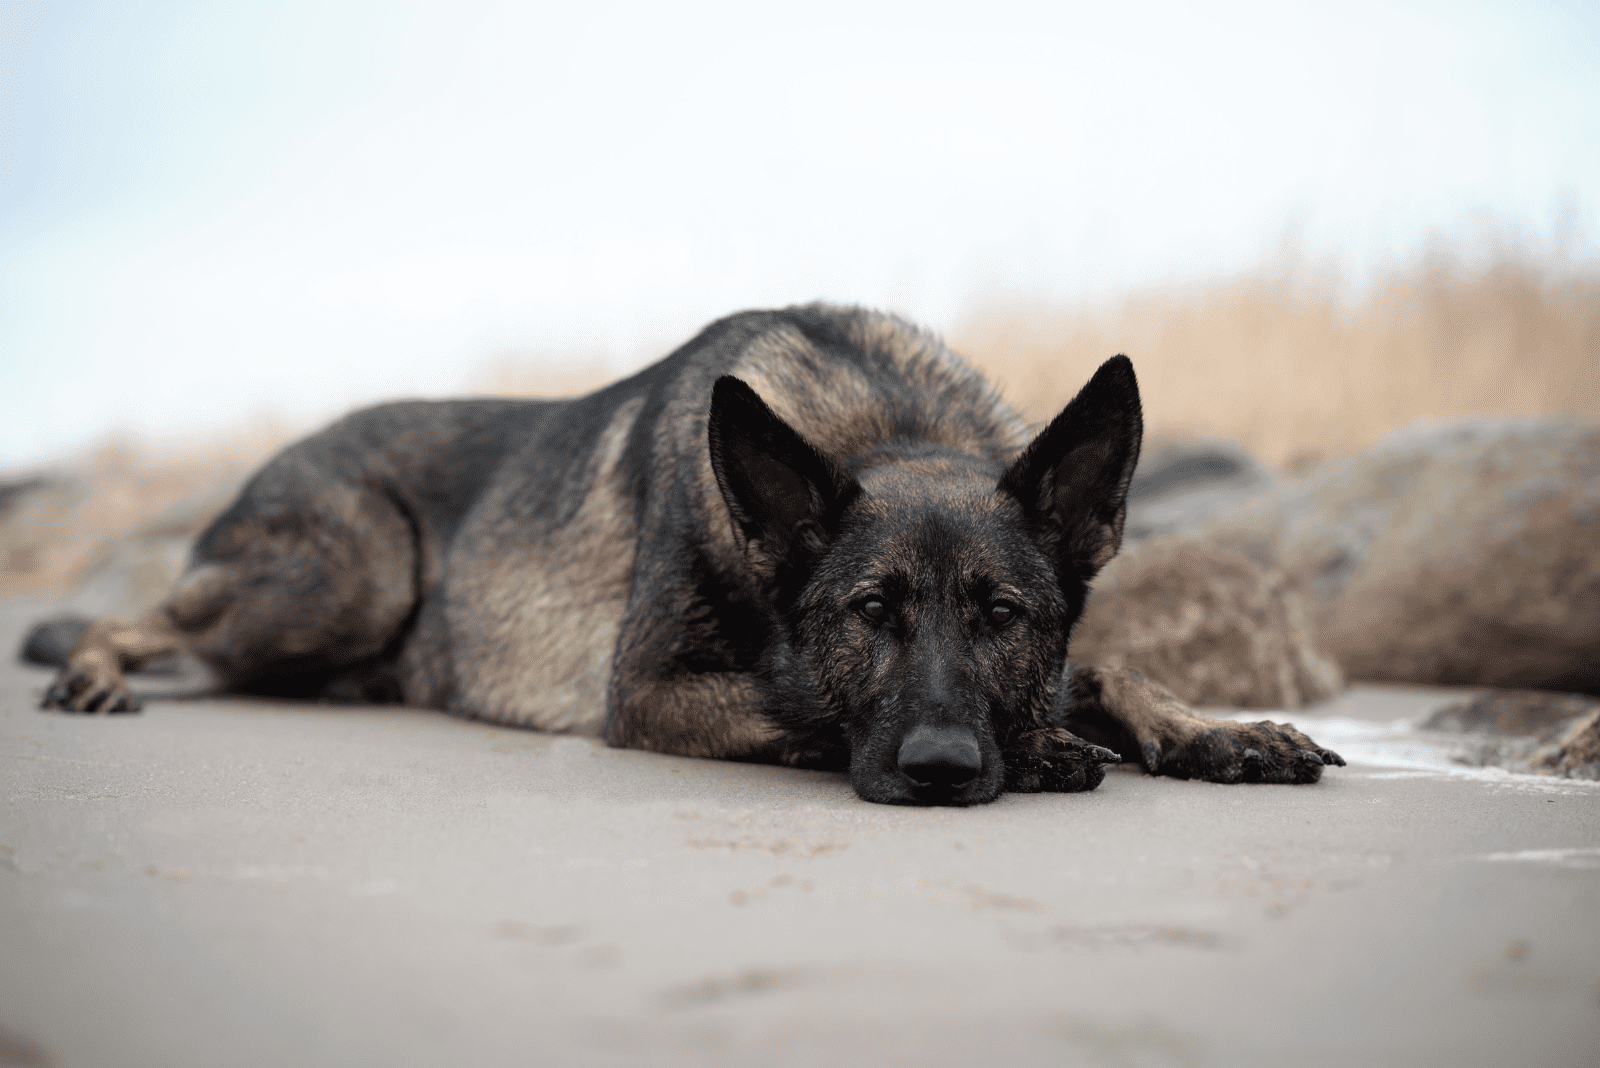 Sable German Shepherd lying down and resting